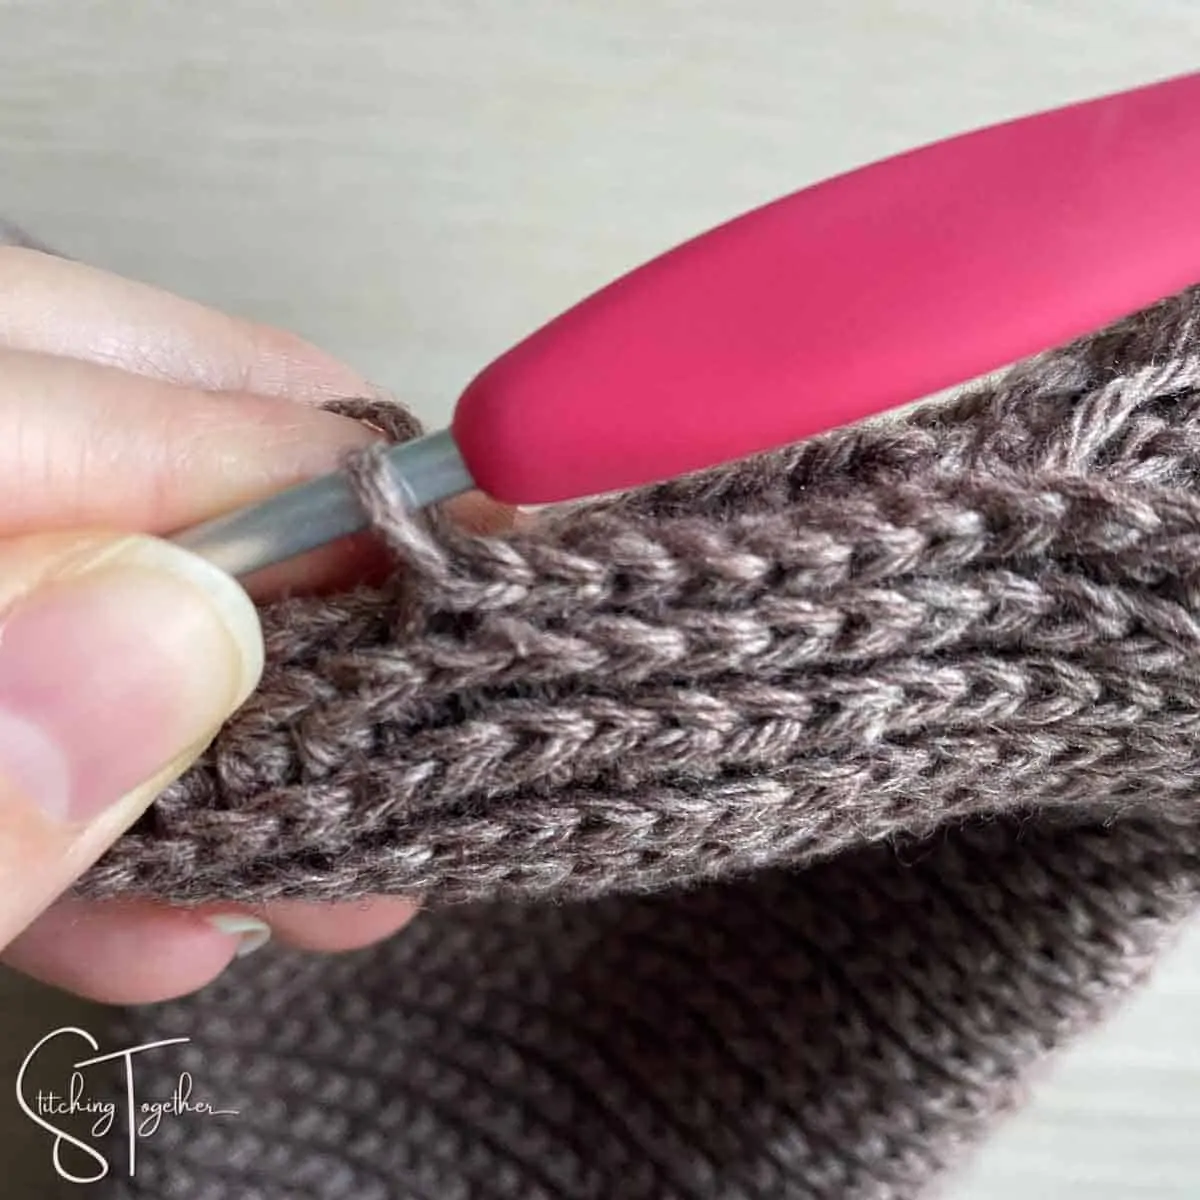 showing crochet slip stitches in progress